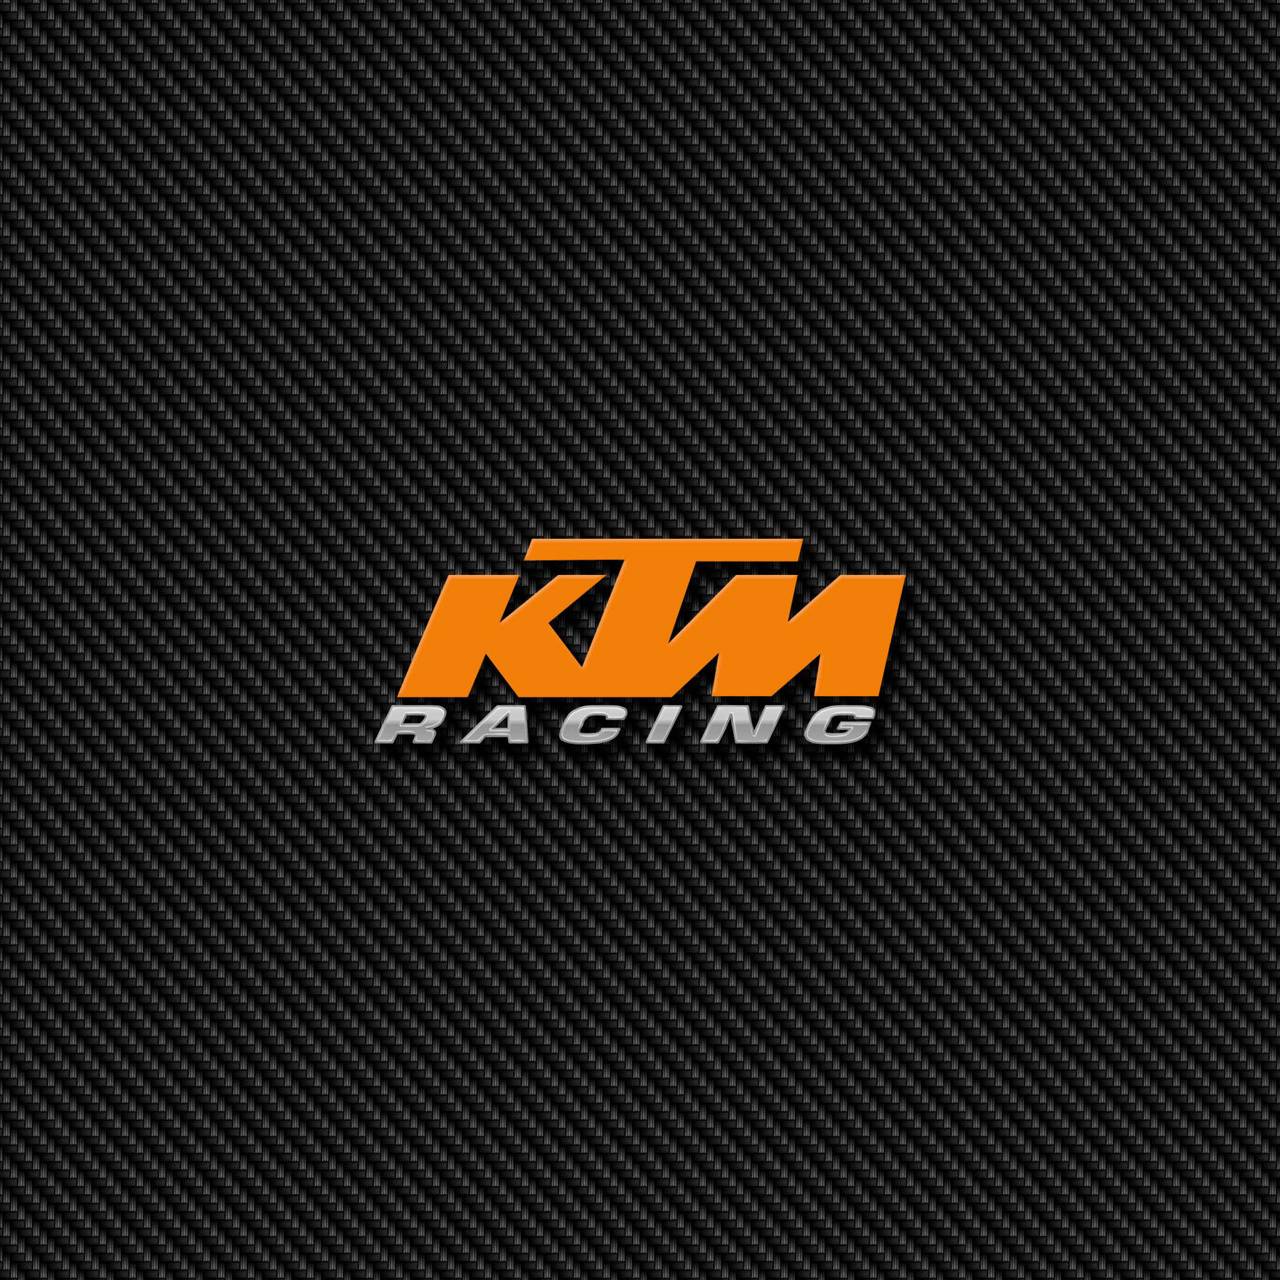 KTM Racing Wallpaper Free KTM Racing Background